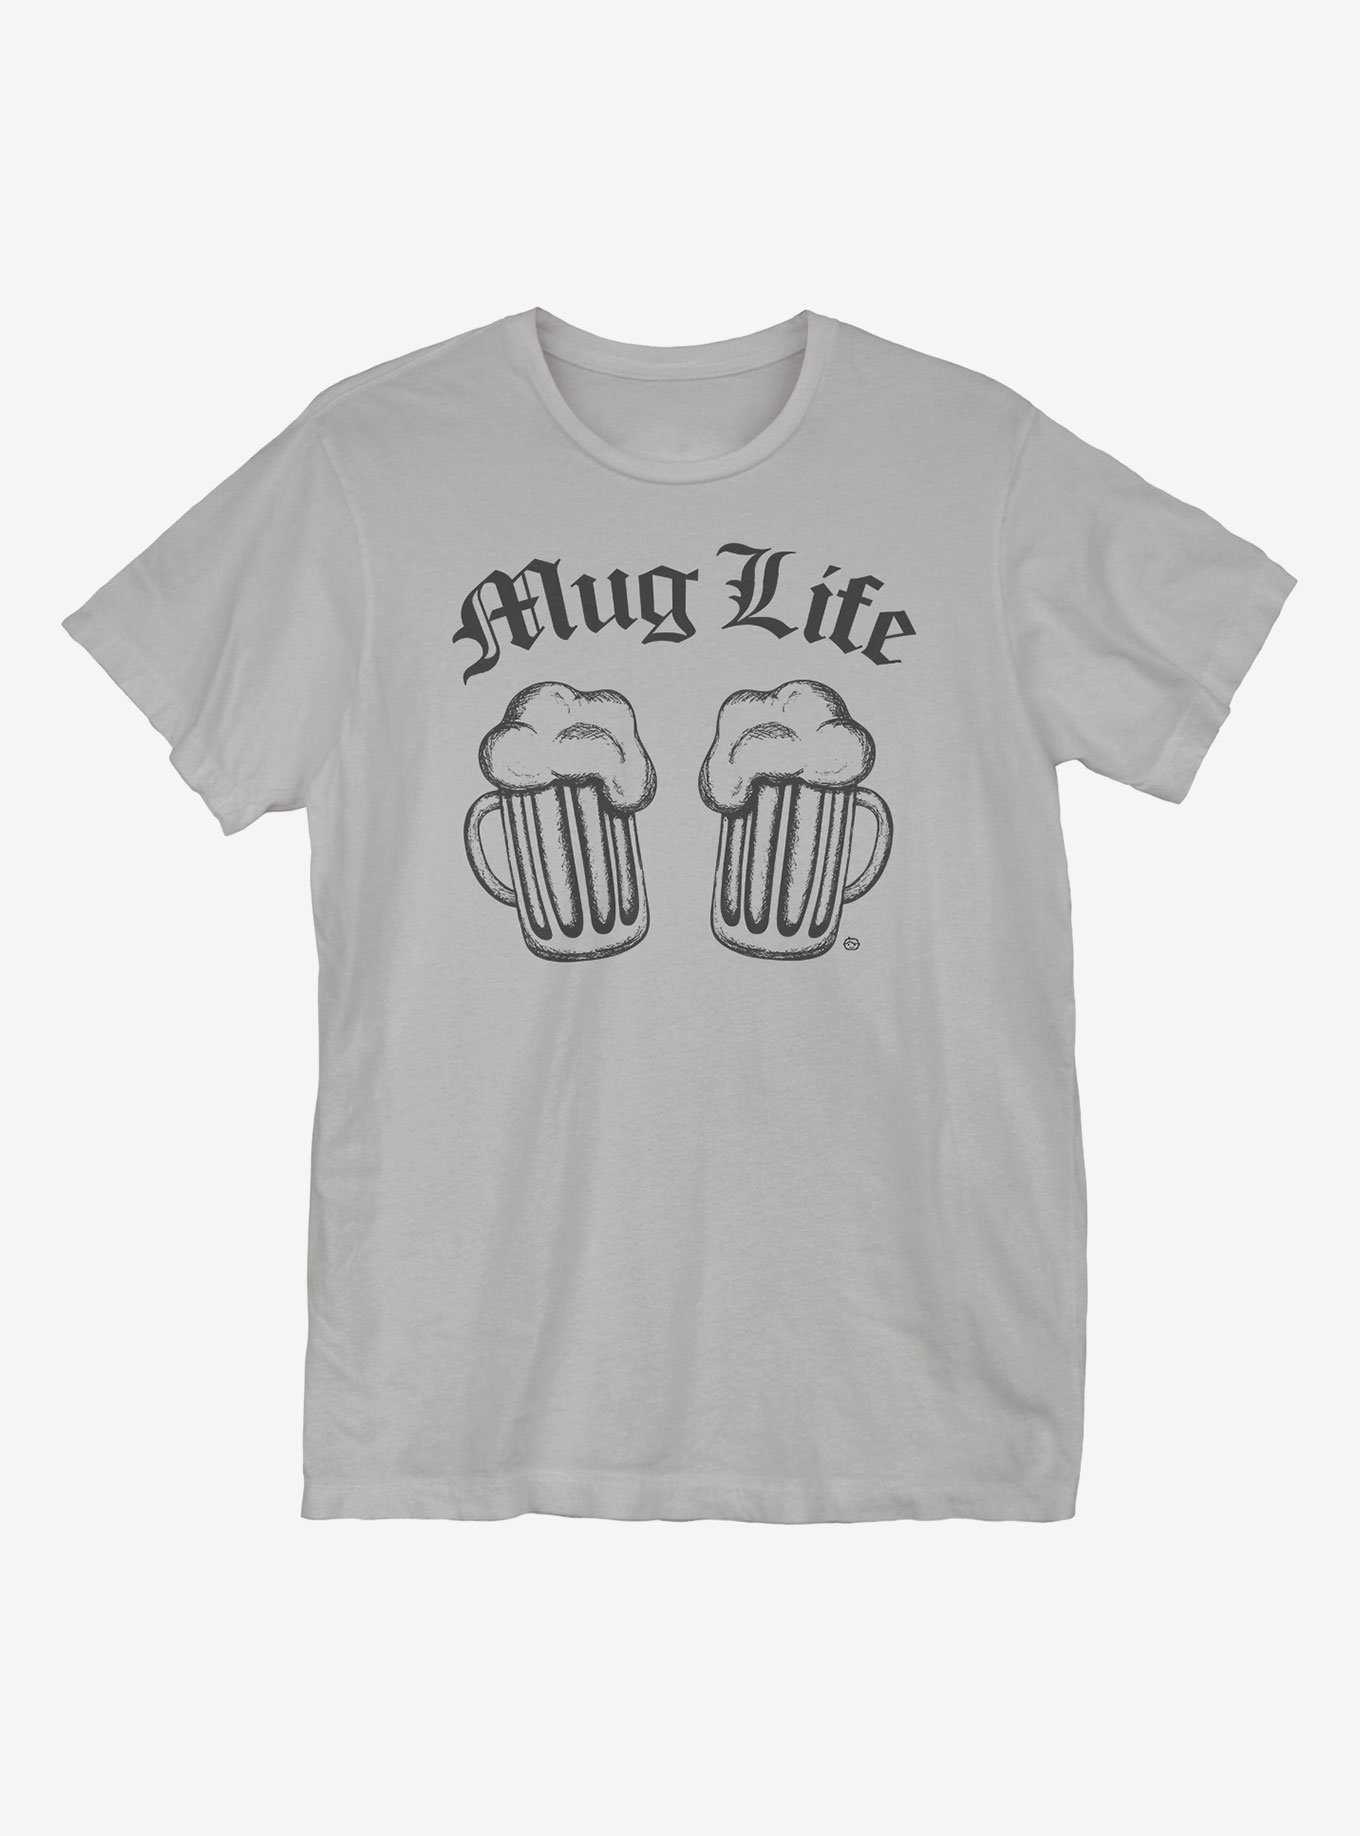 Mug Life T-Shirt , , hi-res